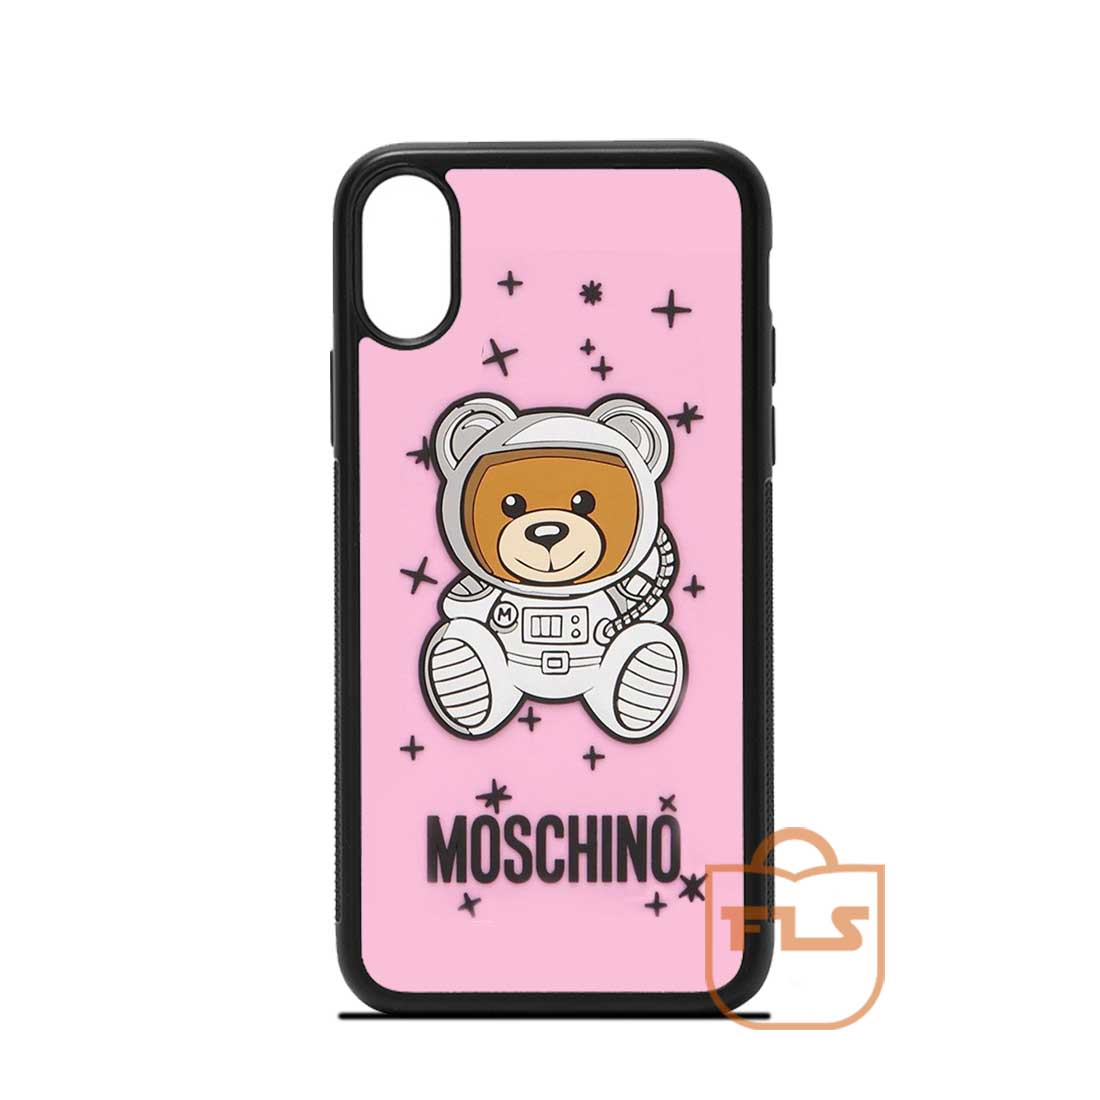 moschino iphone x phone case